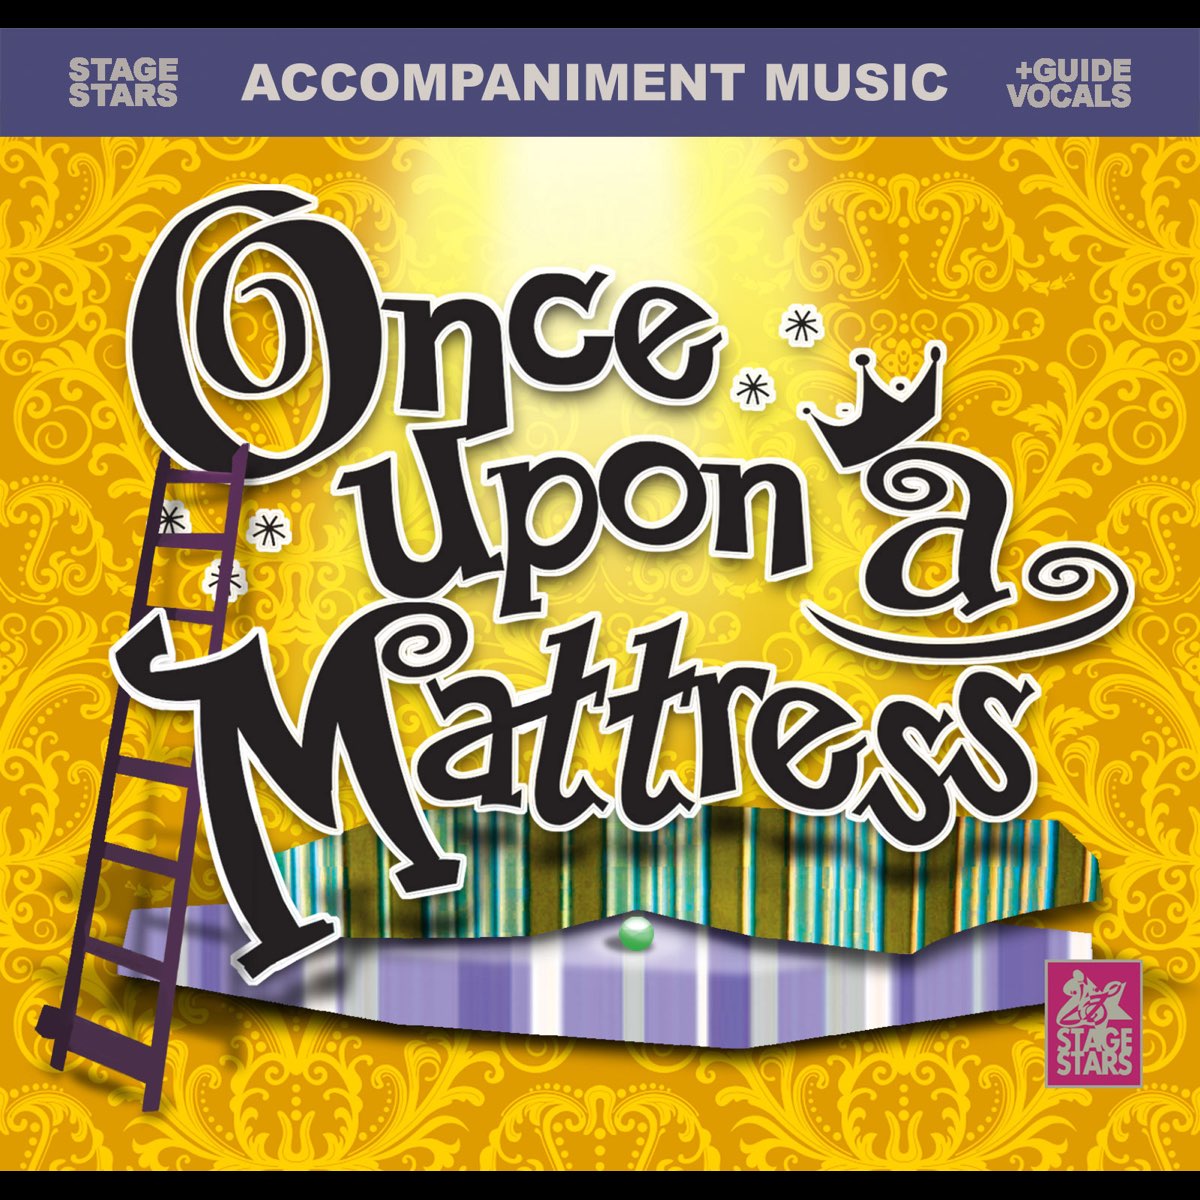 ‎Once Upon a Mattress par Stage Stars Records sur Apple Music